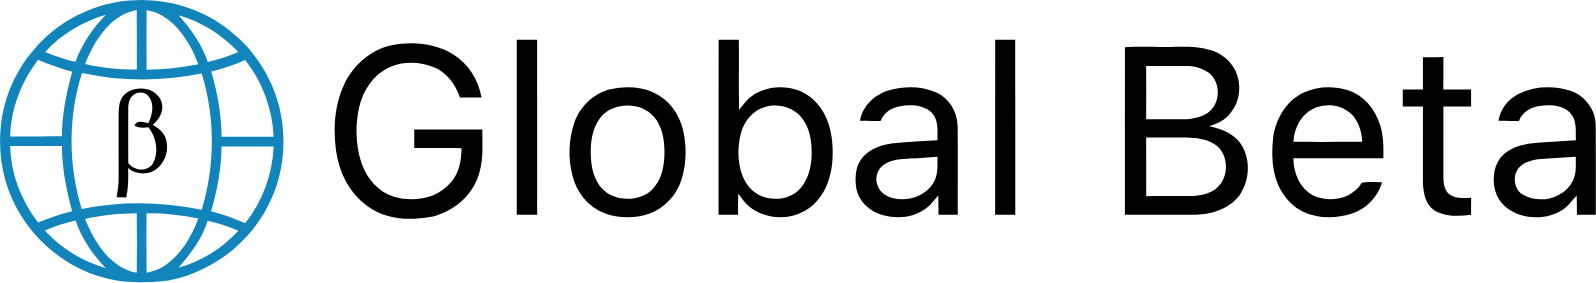 Global Beta logo large (transparent PNG)